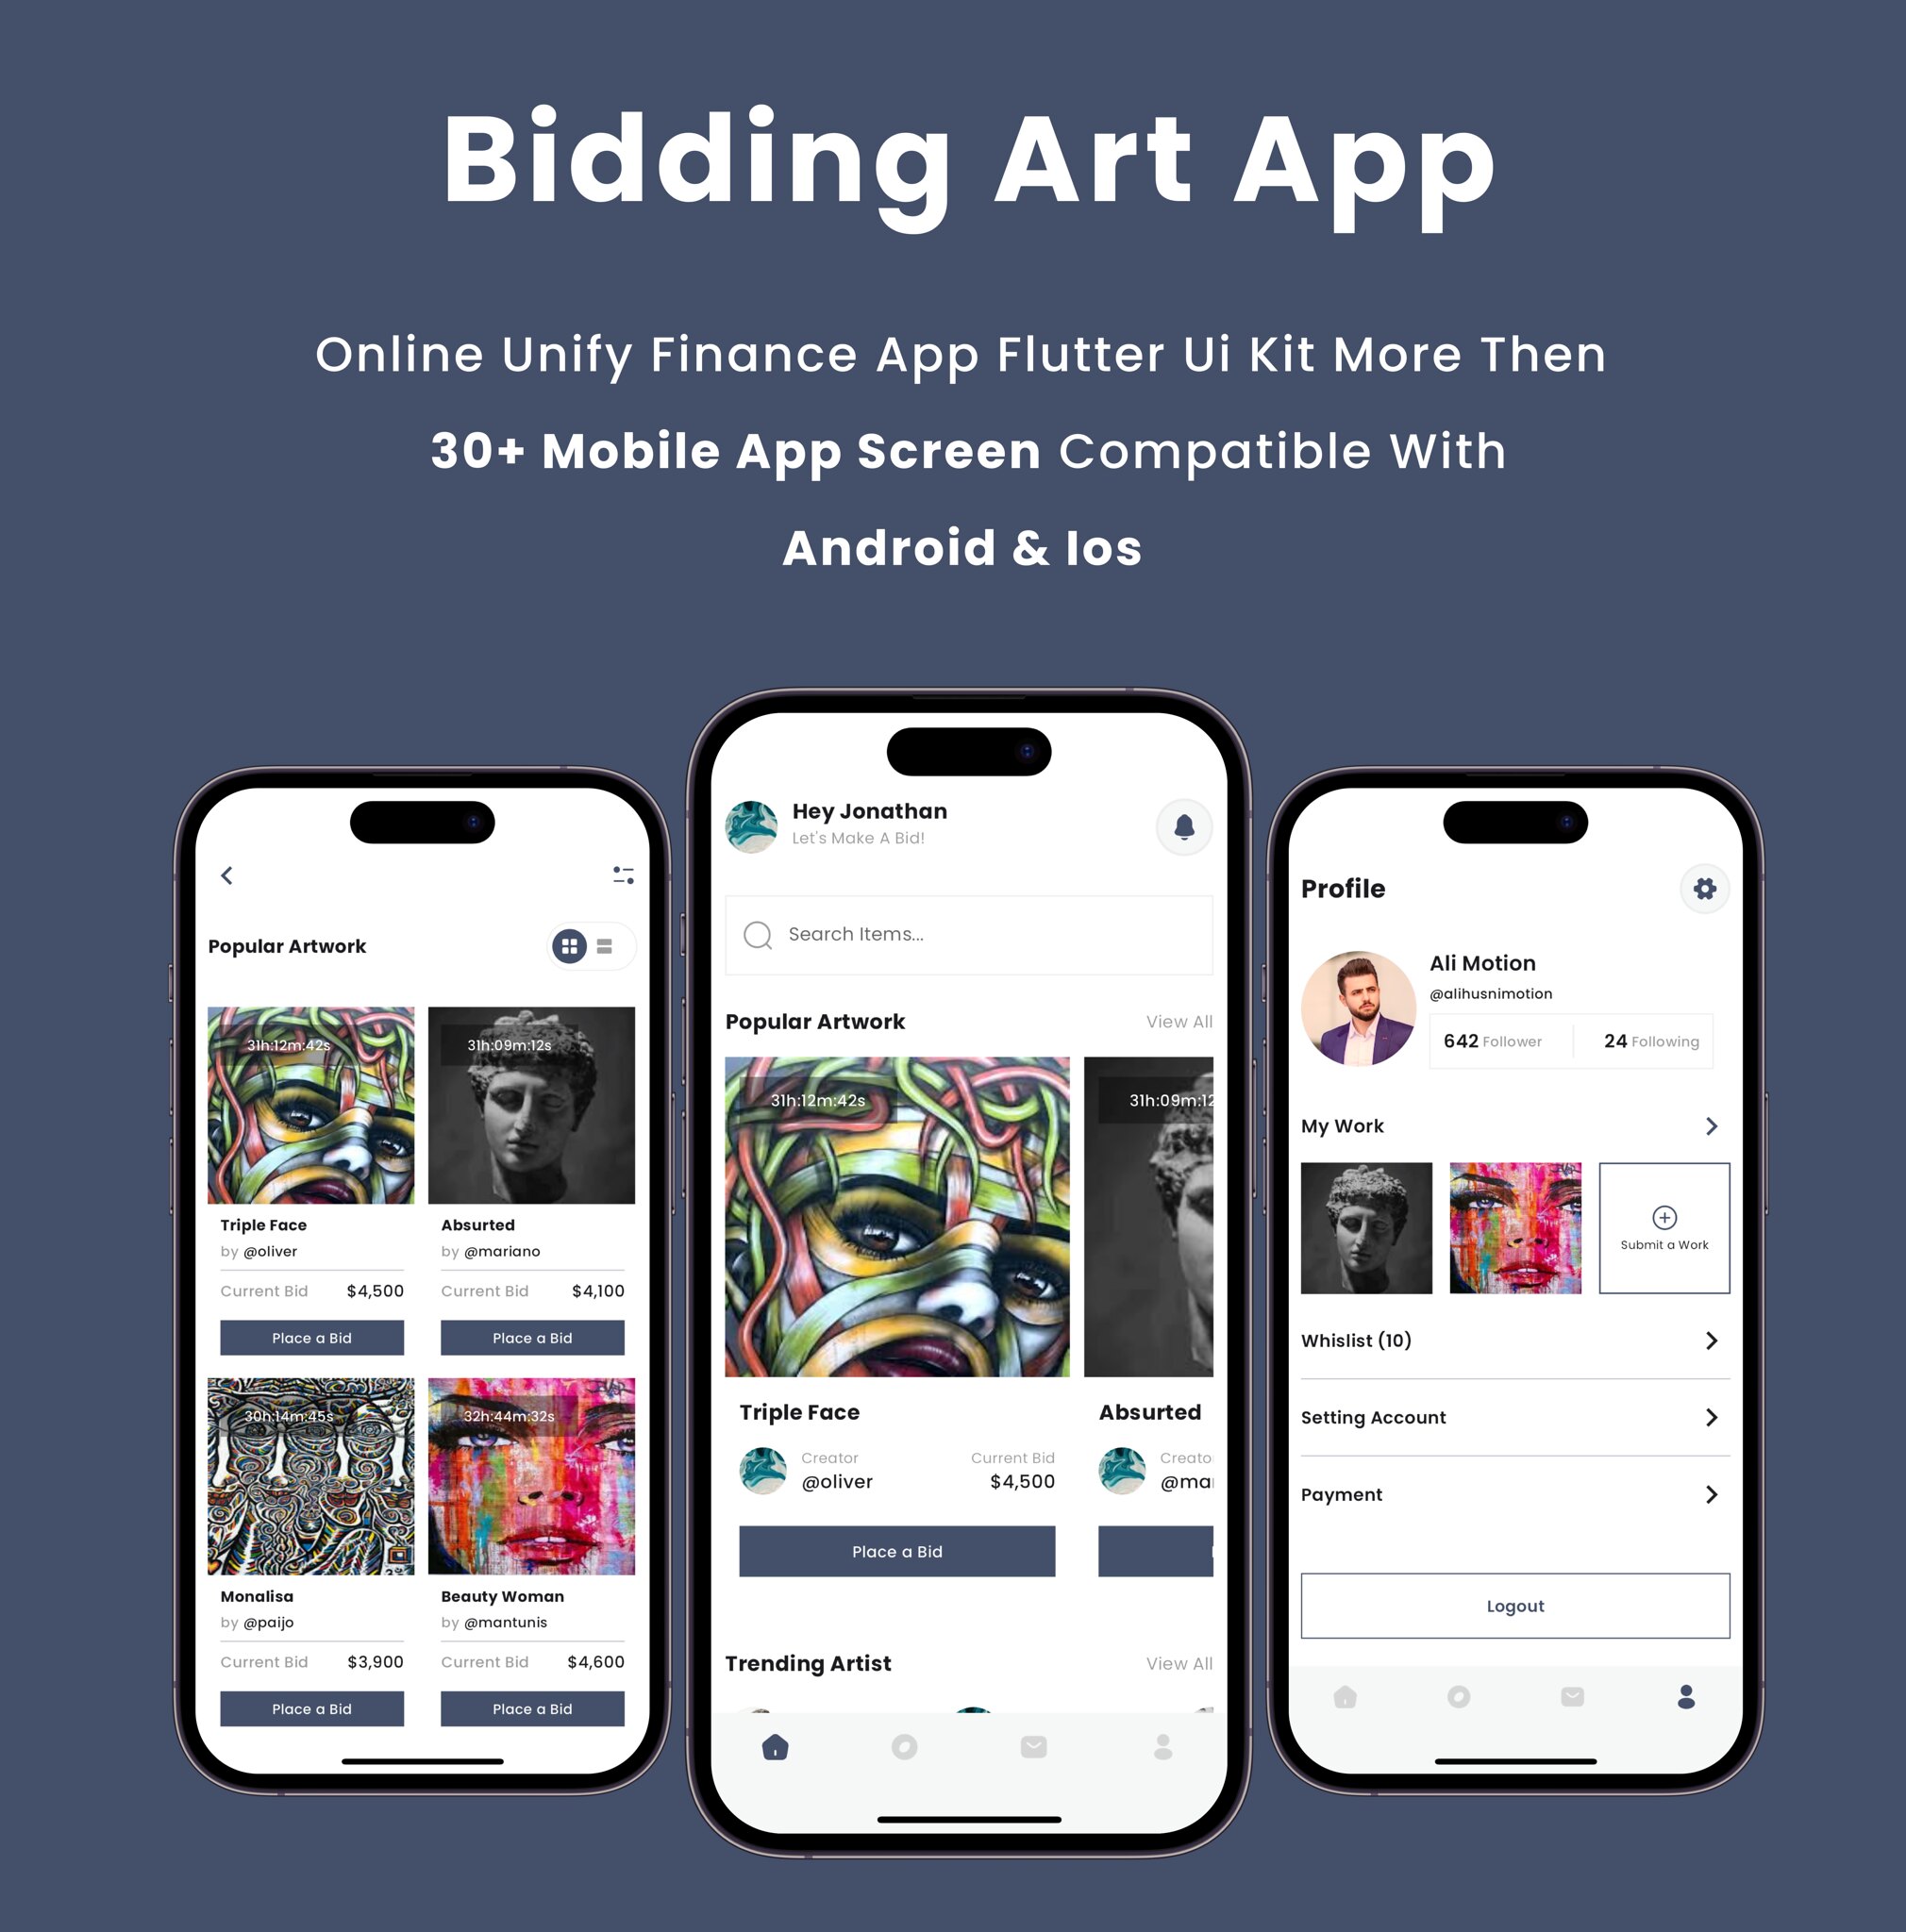 Biddingart App - Online Art Bidding Flutter App | Android | iOS Mobile App Template